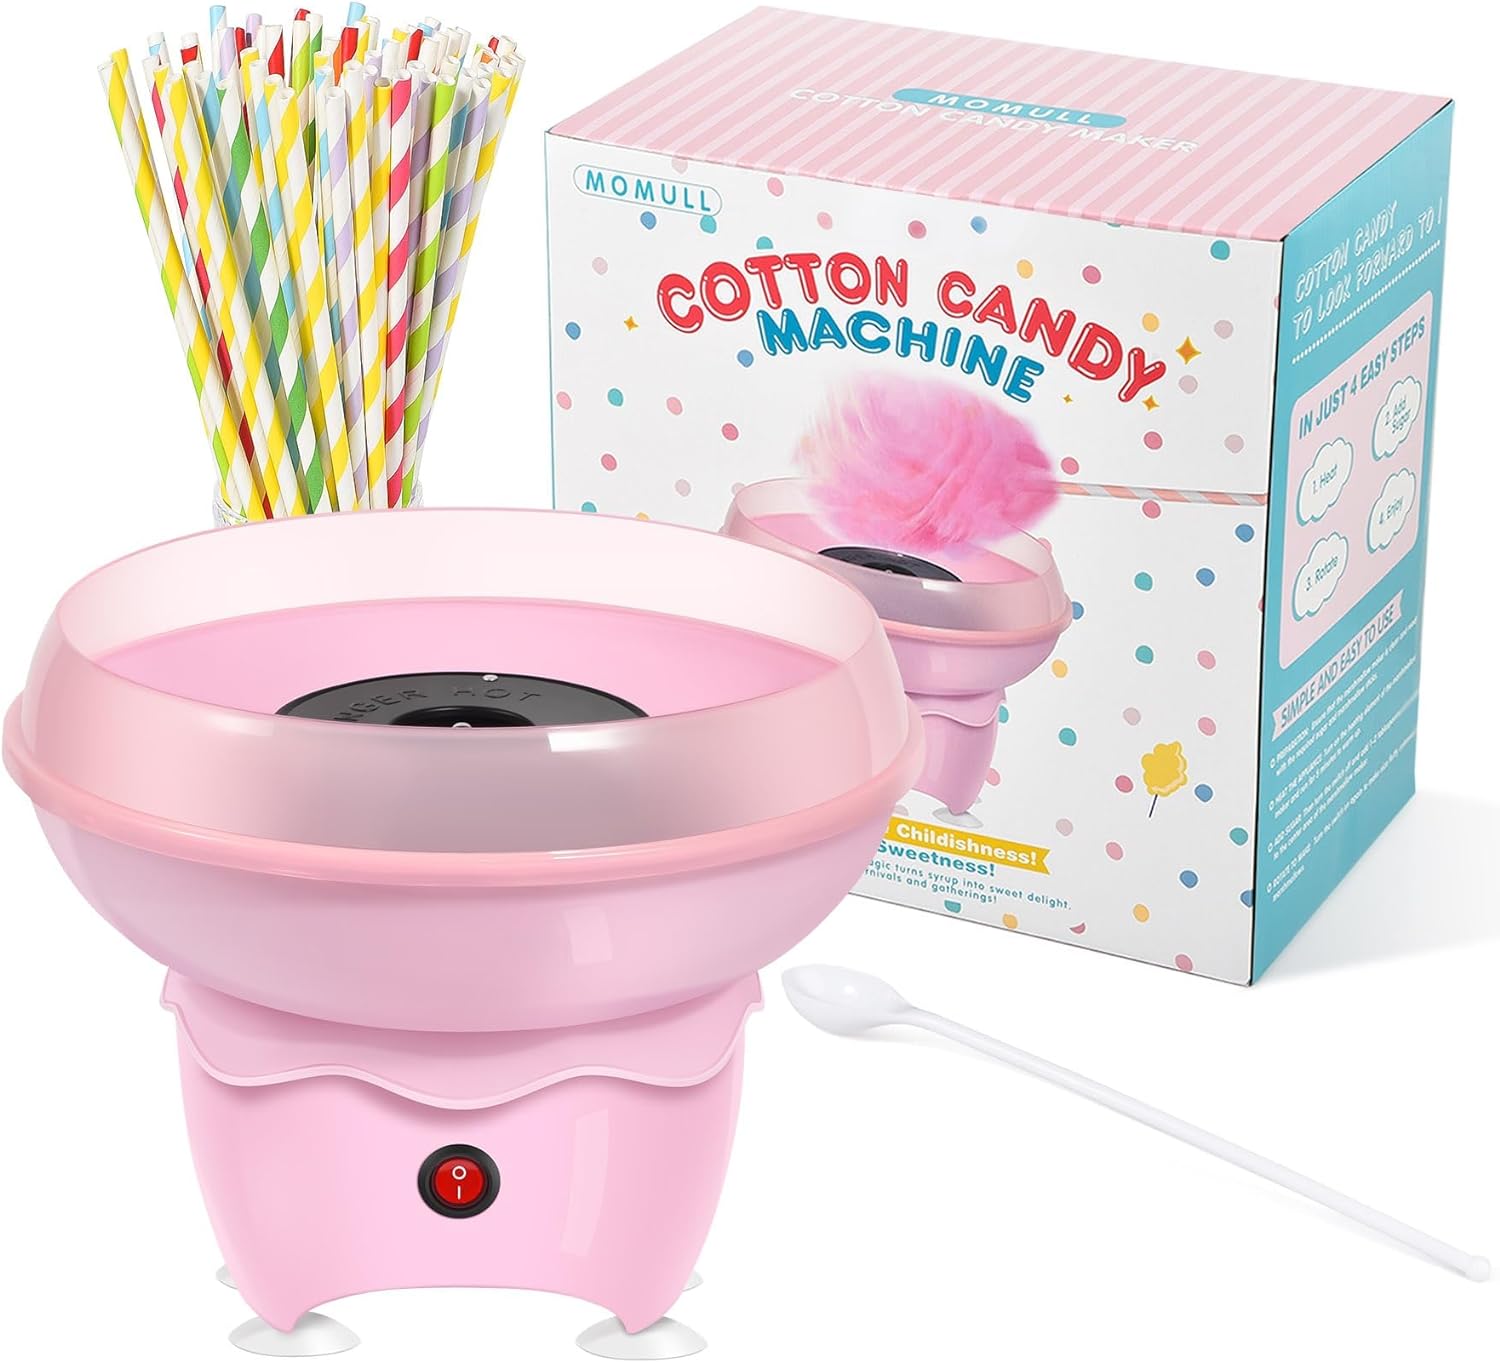 MOMULL Cotton Candy Machine